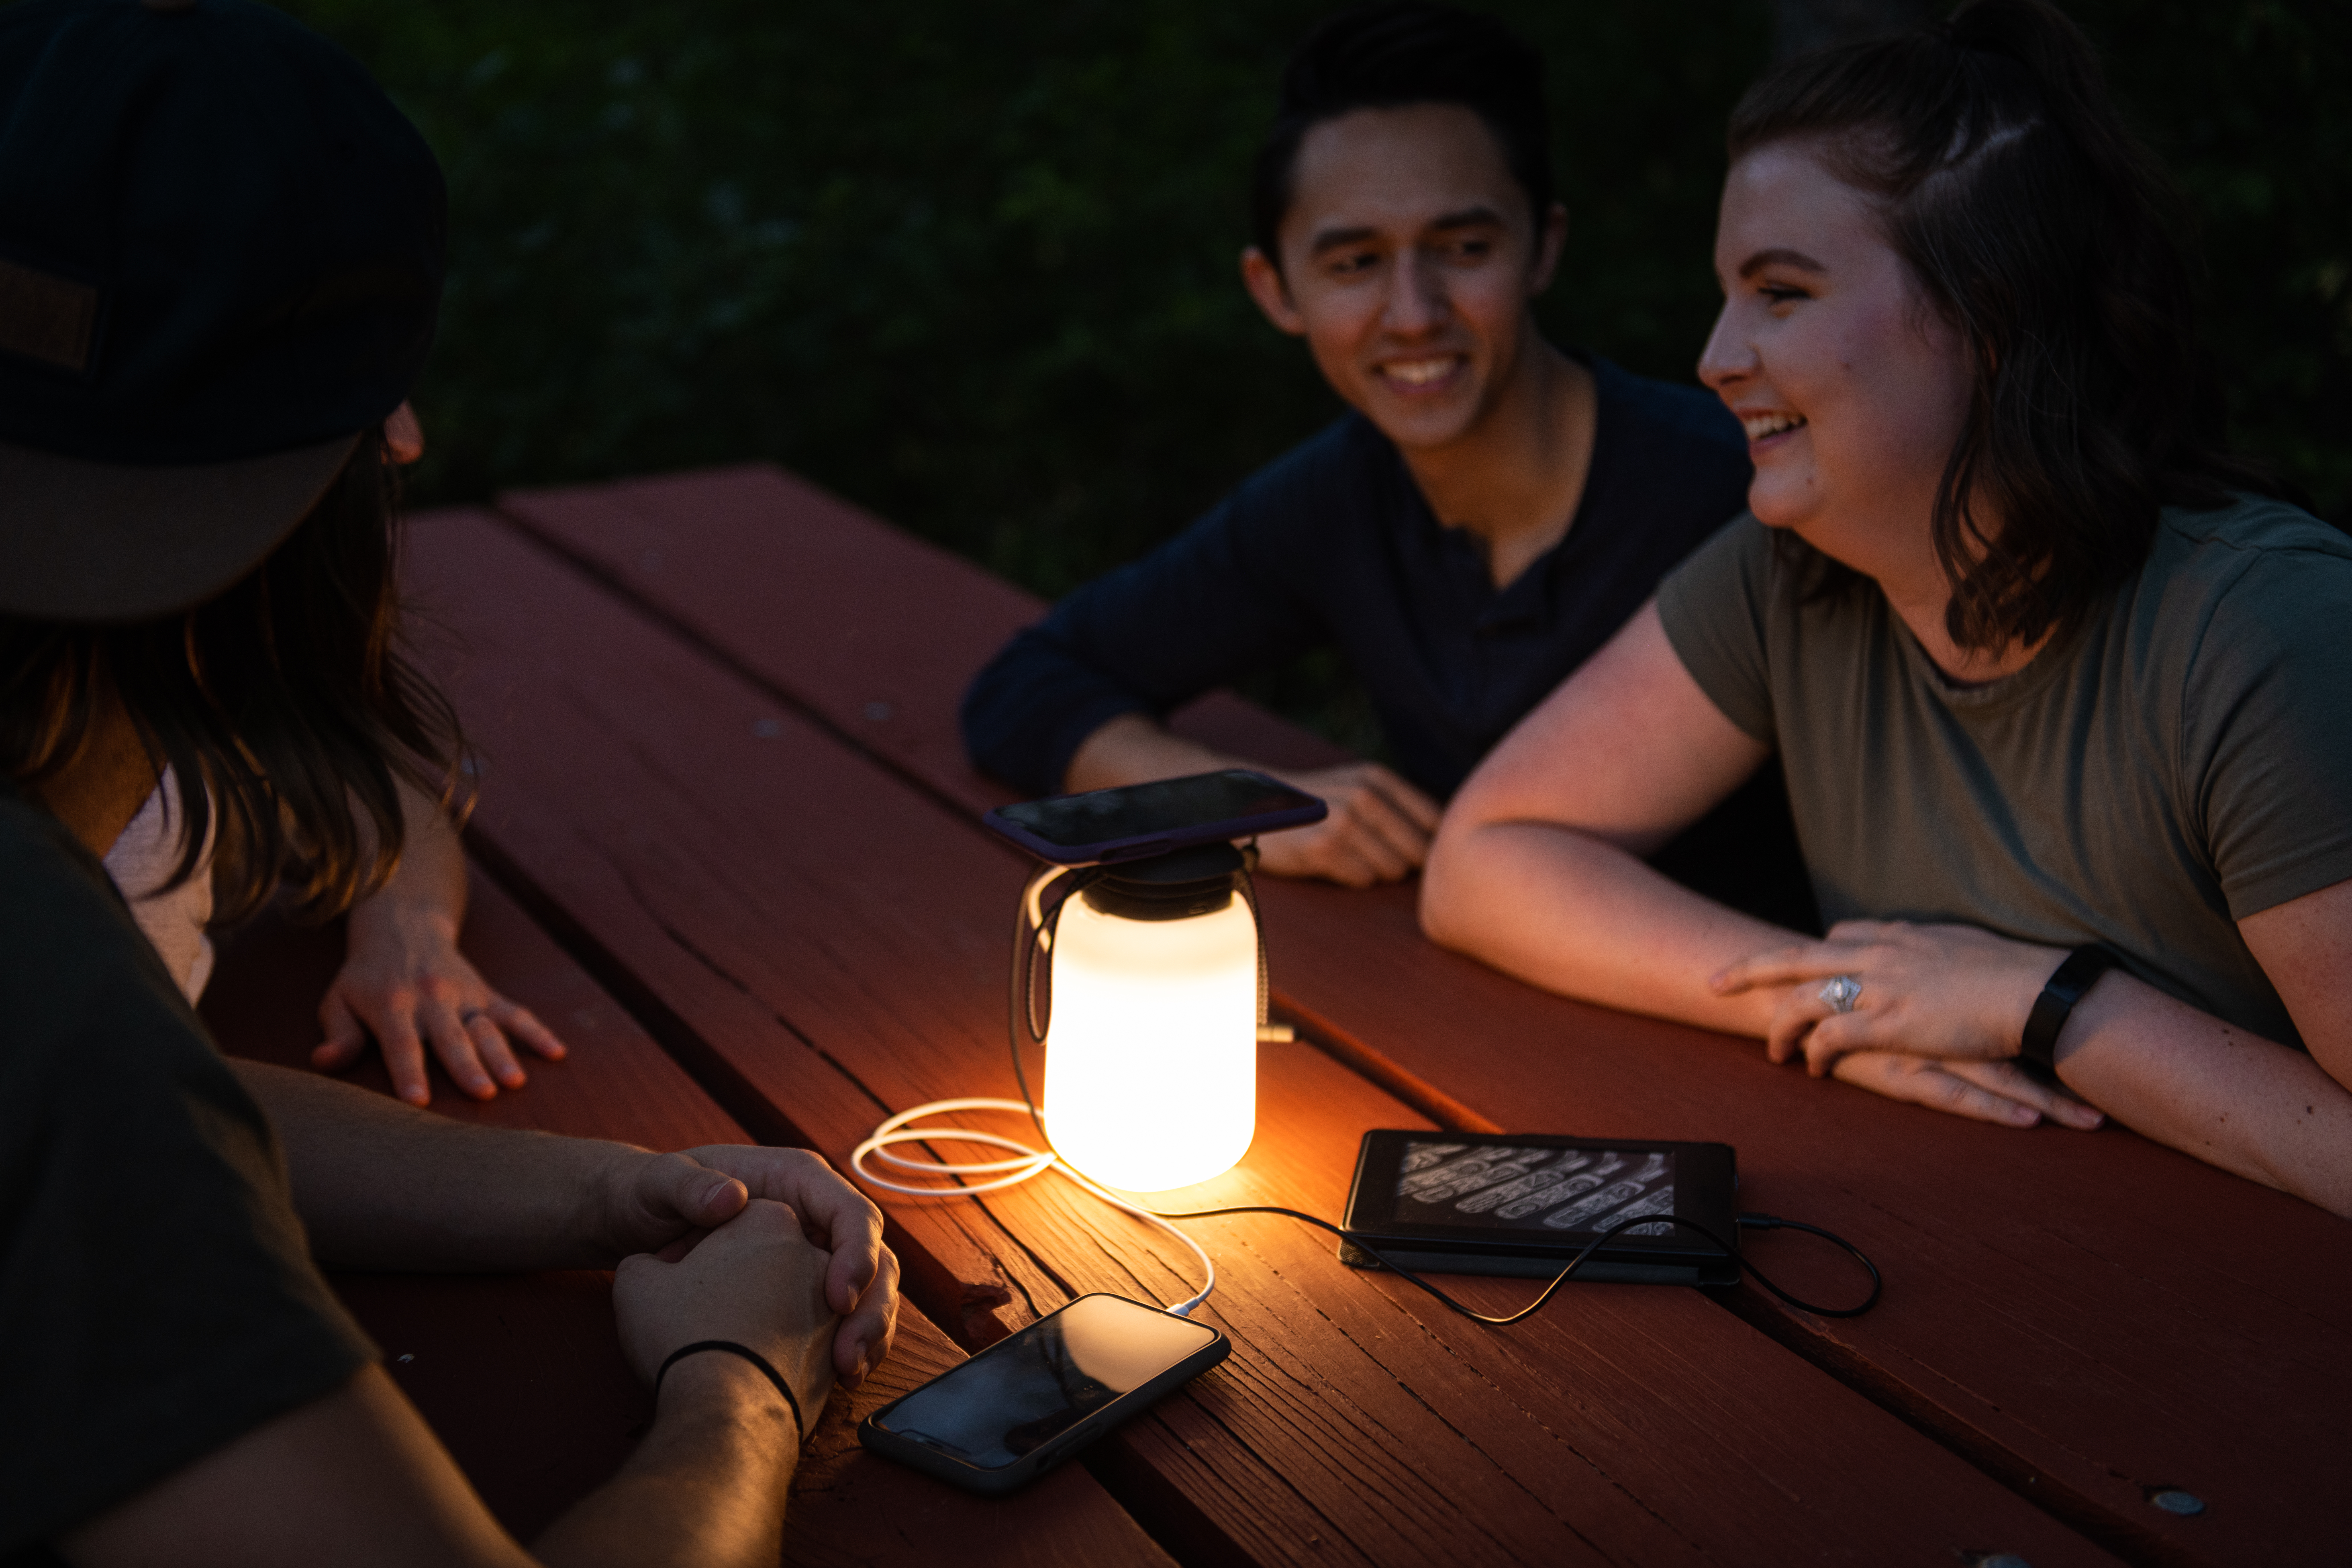 Boulder lantern and power bank shining light and charging phones